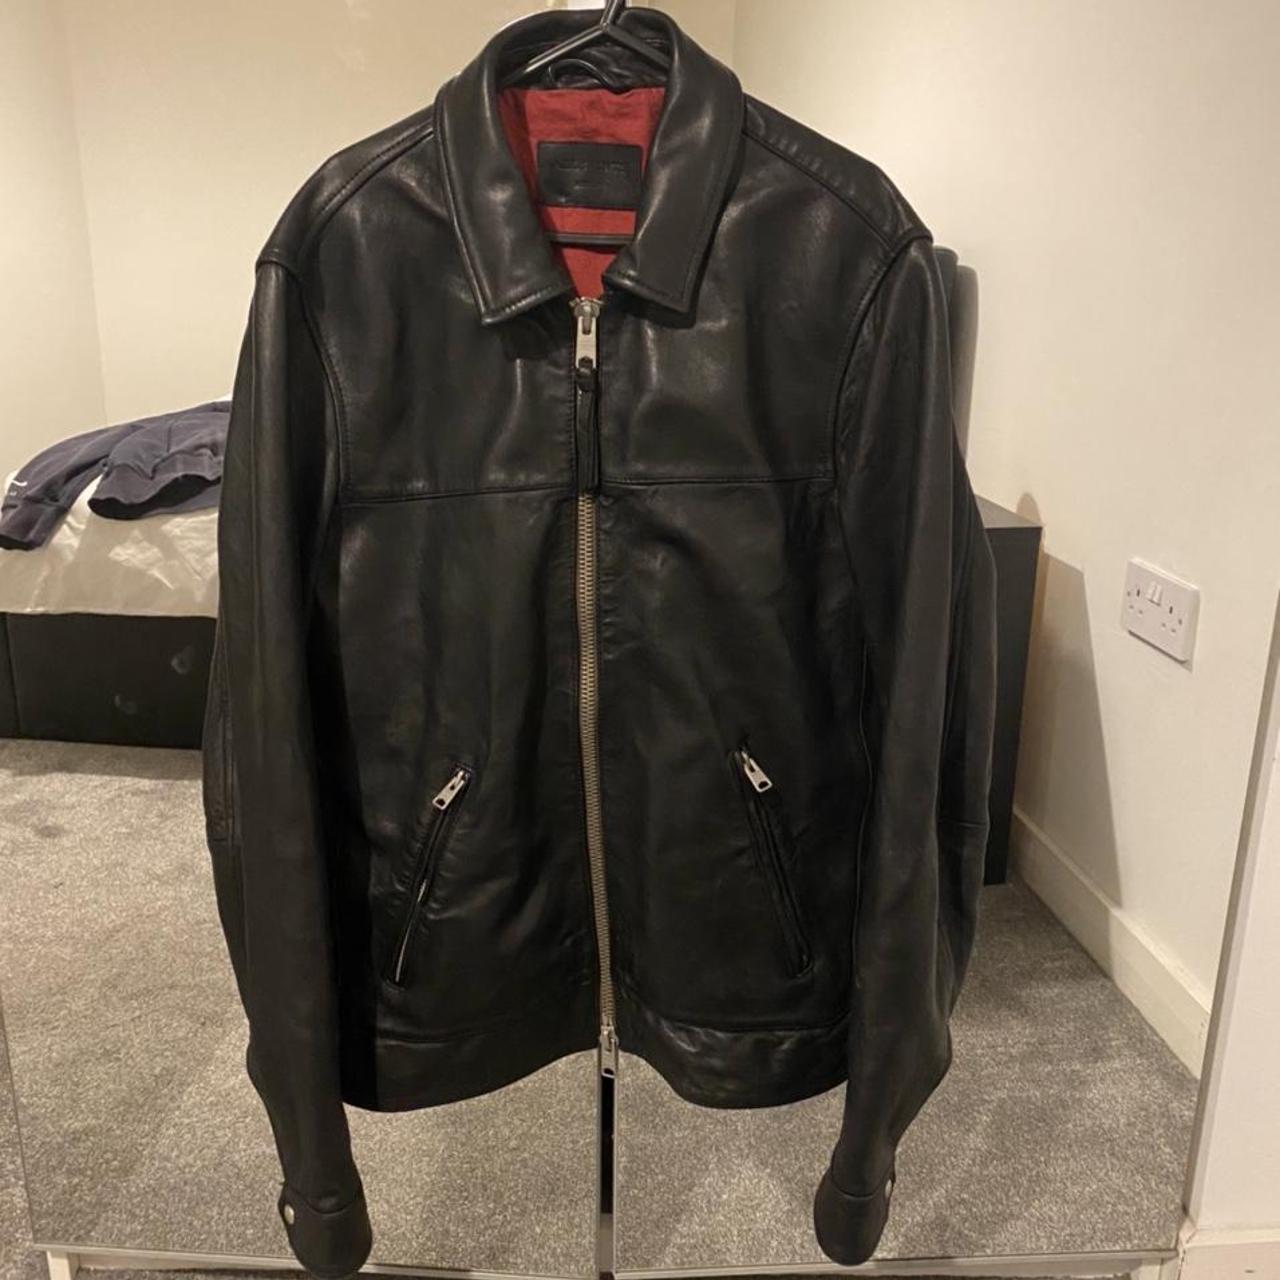 Premium Leather Jacket / haven’t worn since 2017 /... - Depop